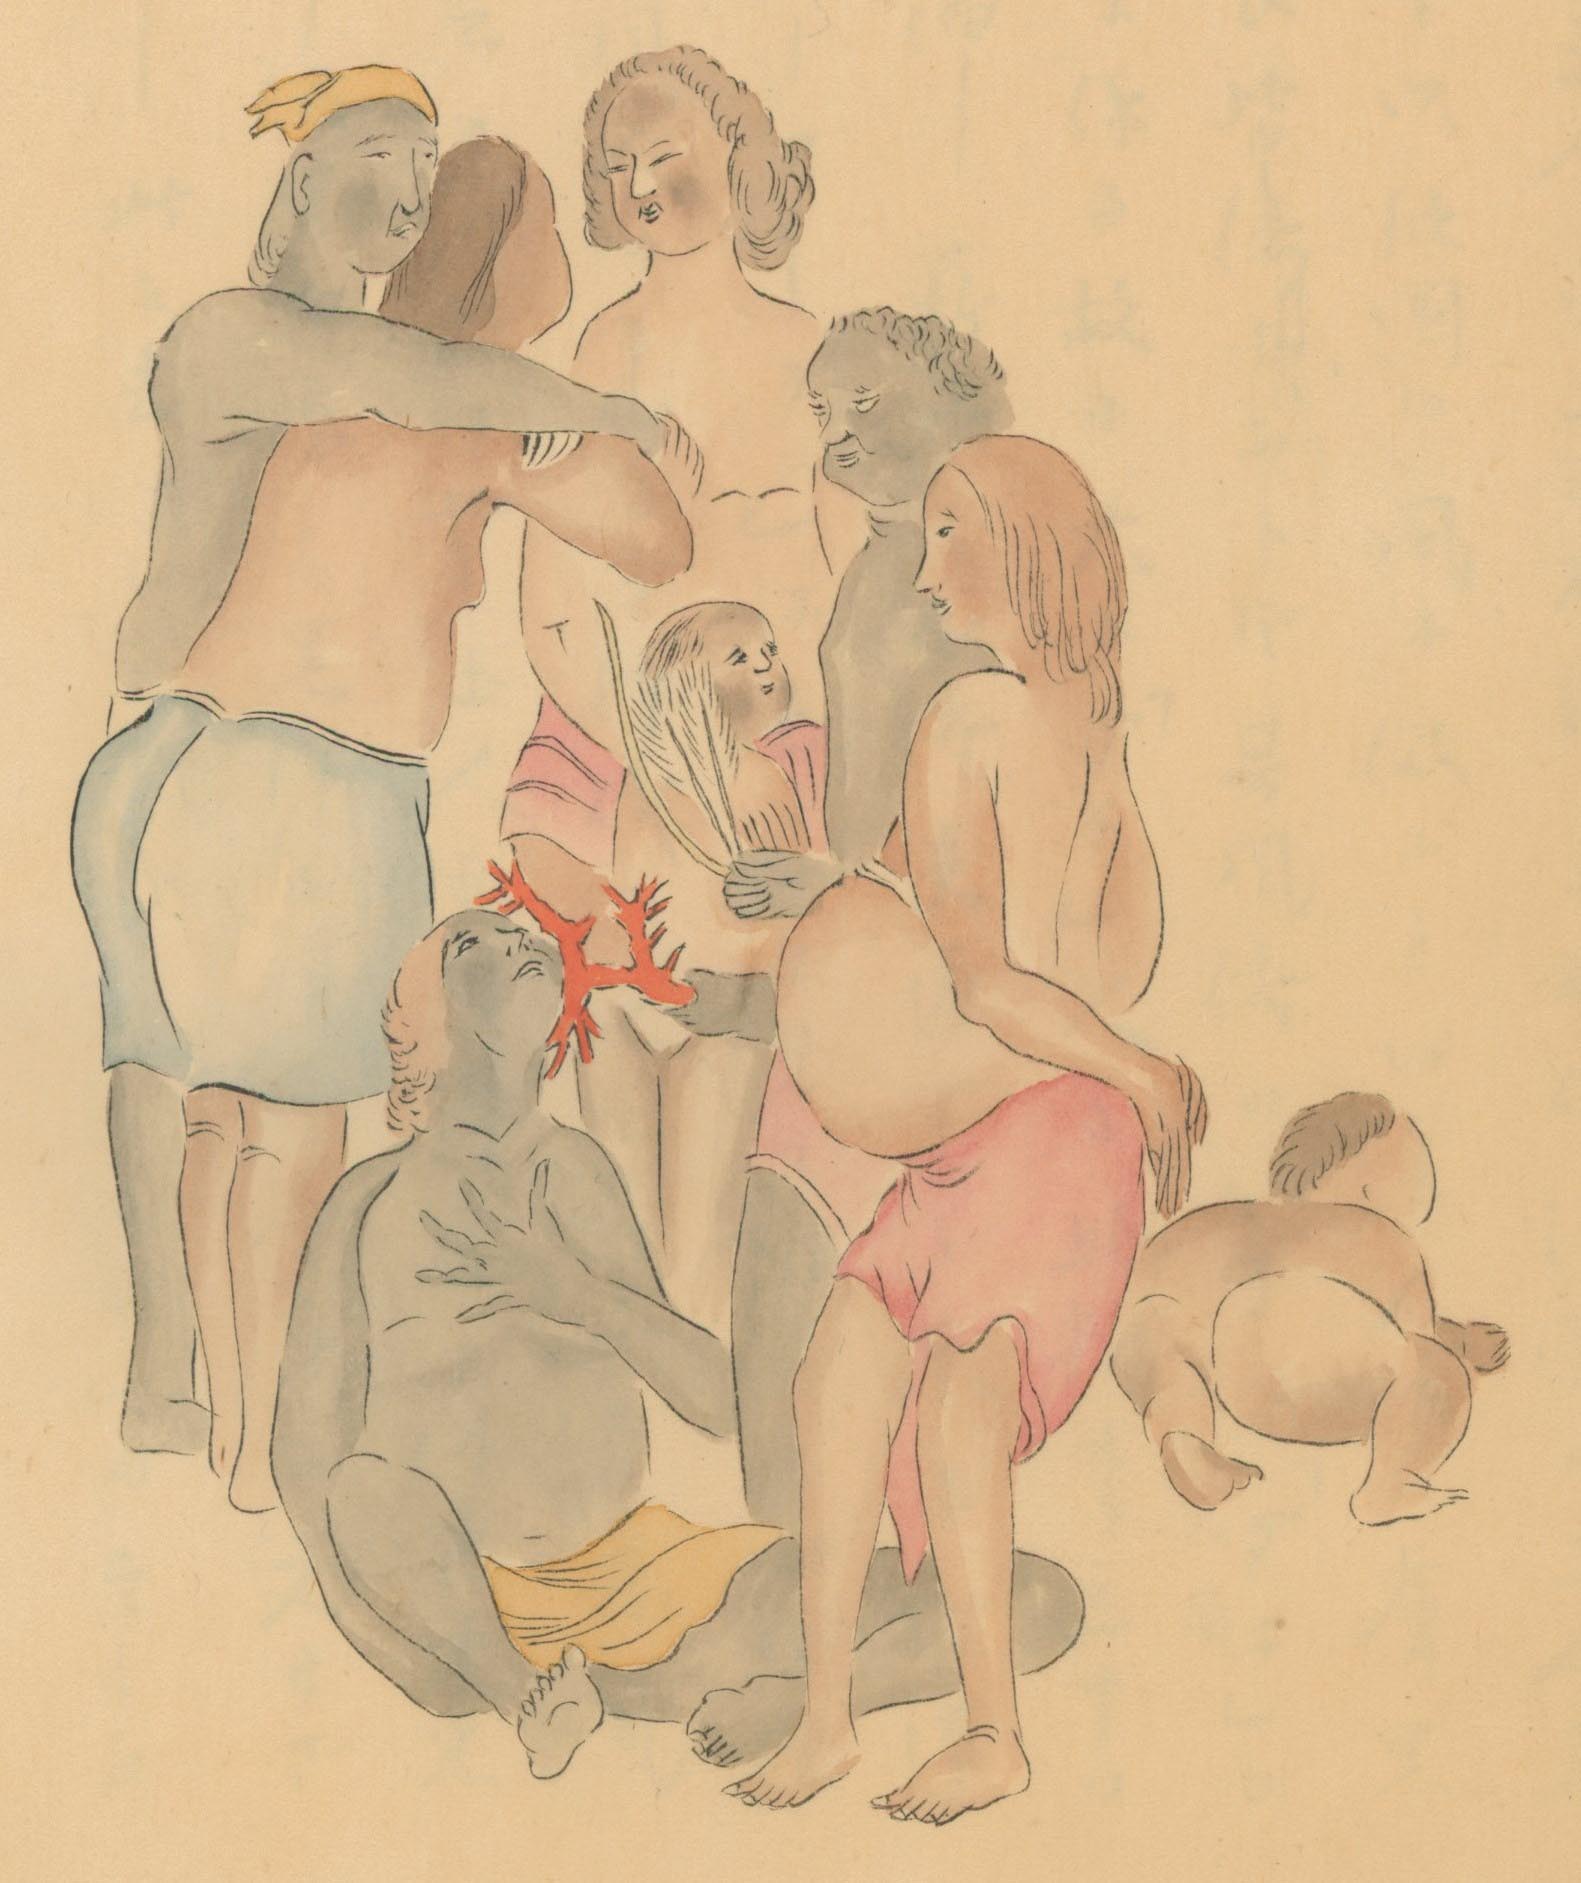 Illustration of people from the third volume of Hoyson Kiryaku